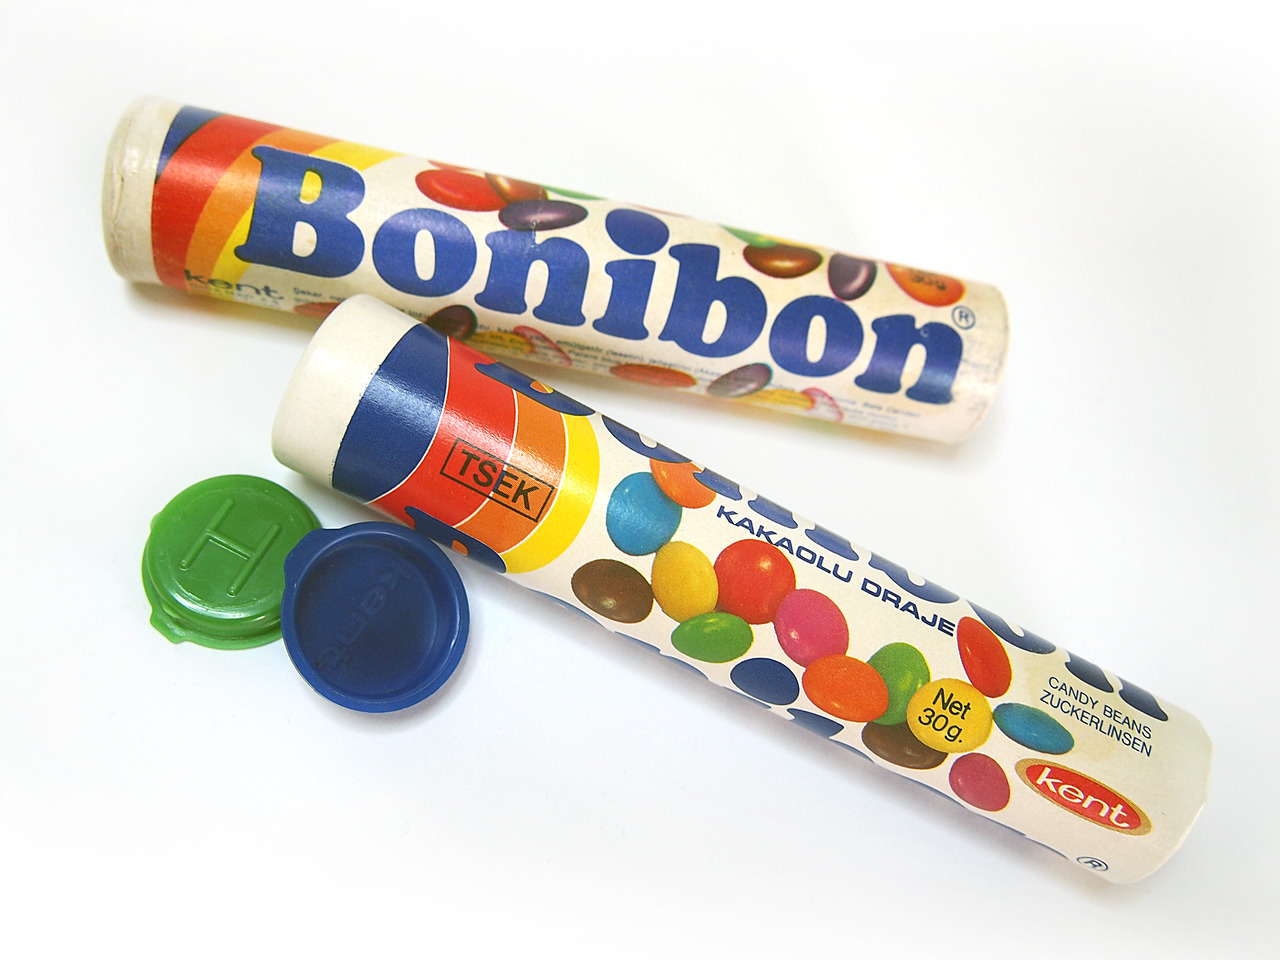 90 е товары. Драже Bonibon 90е. Бондибон конфеты 90е. Конфеты 90х. Конфеты из 90-х.